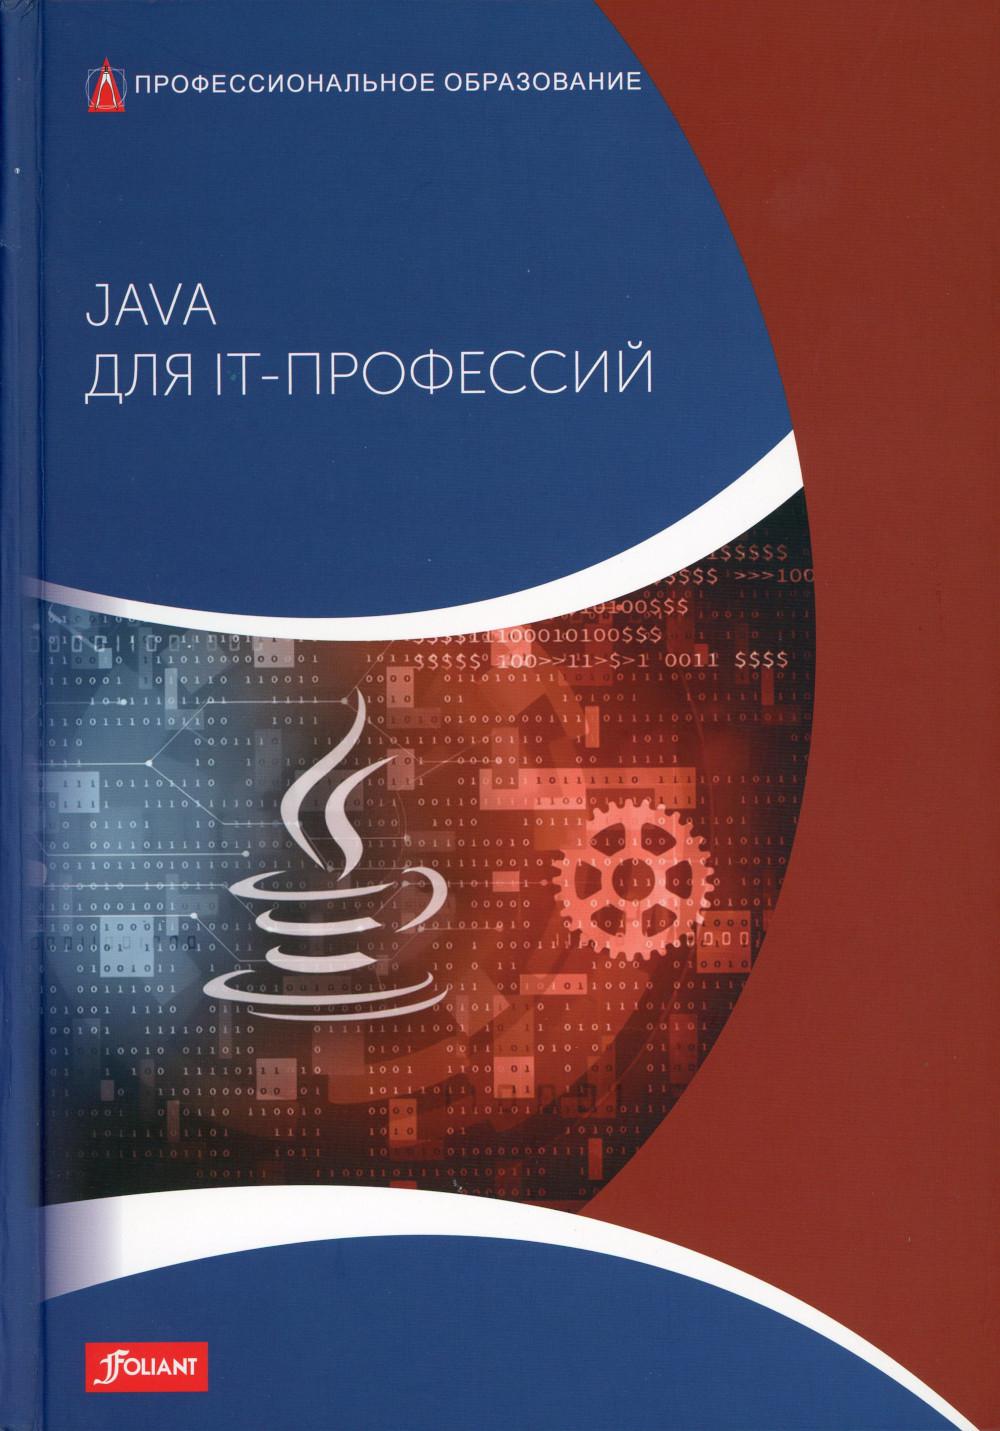 Java  IT-:  / .  